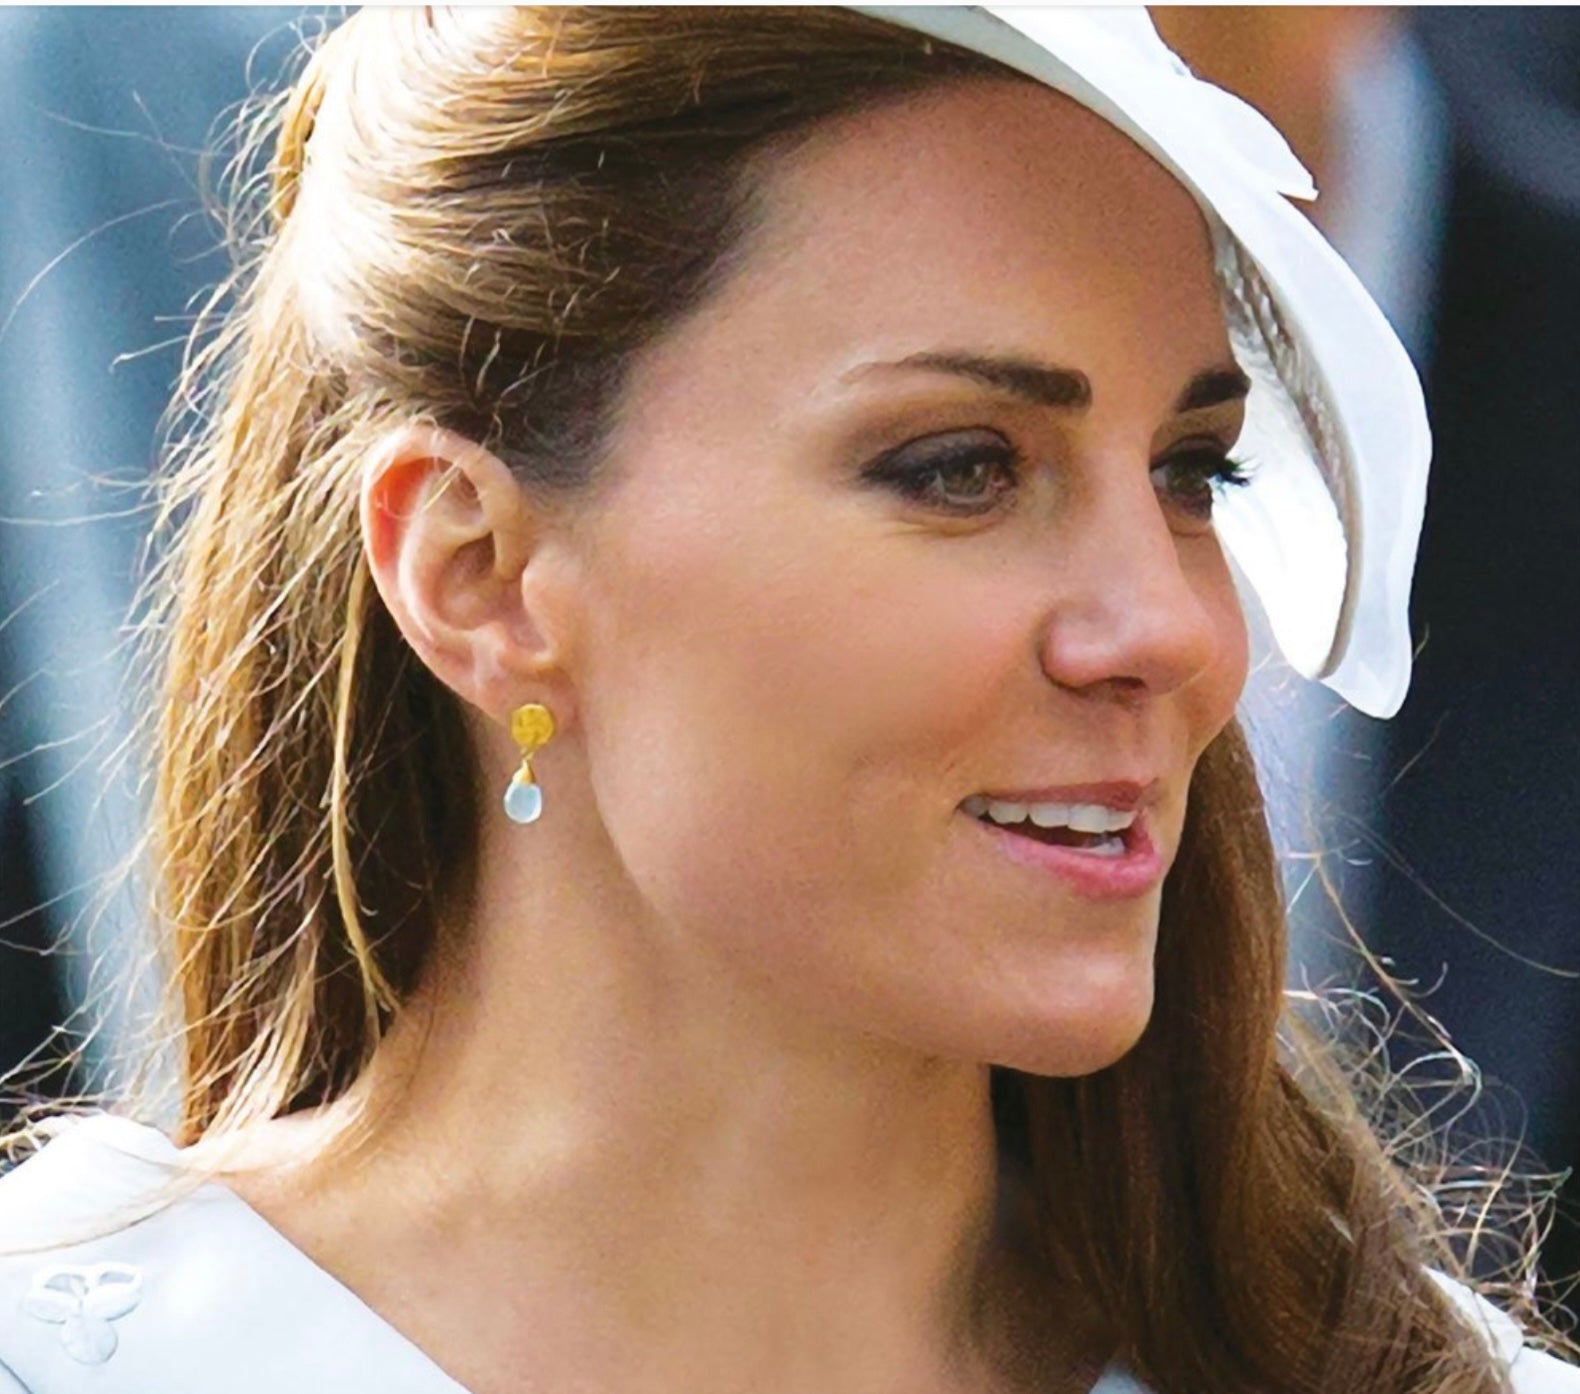 Classic Athena Gemstone Drop Earrings Large - Gold